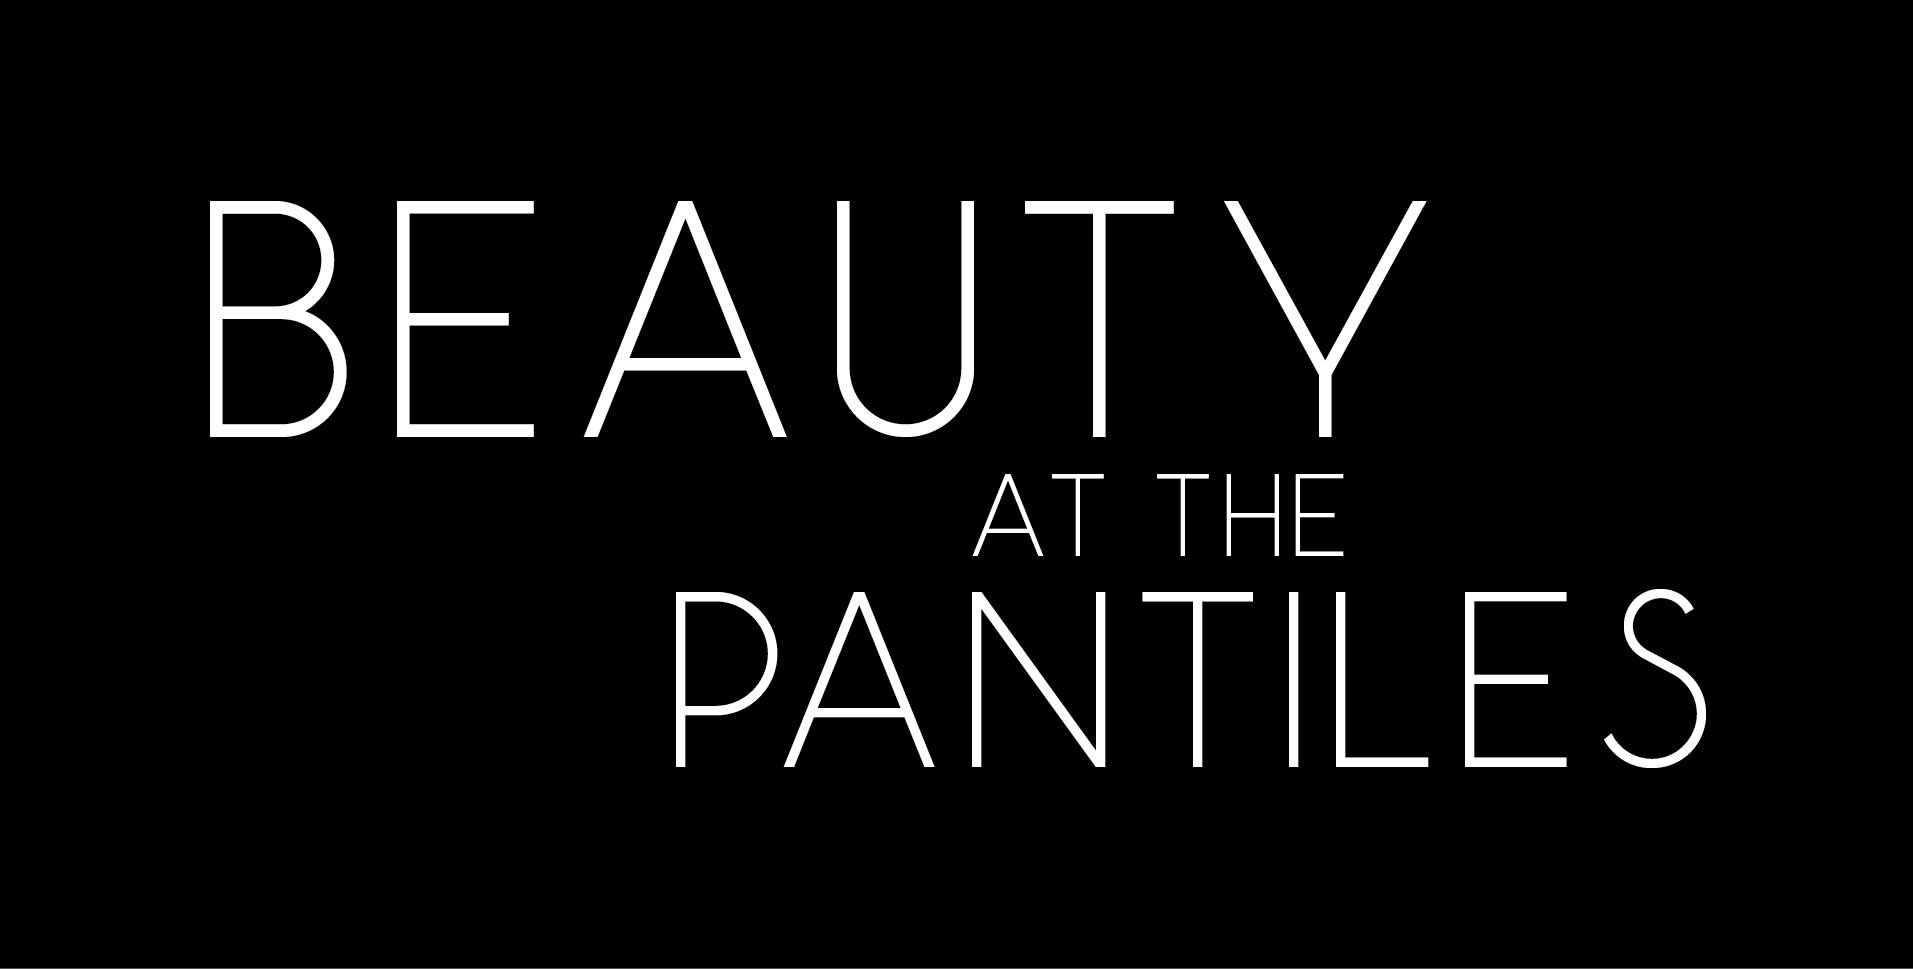 Beauty at the Pantiles